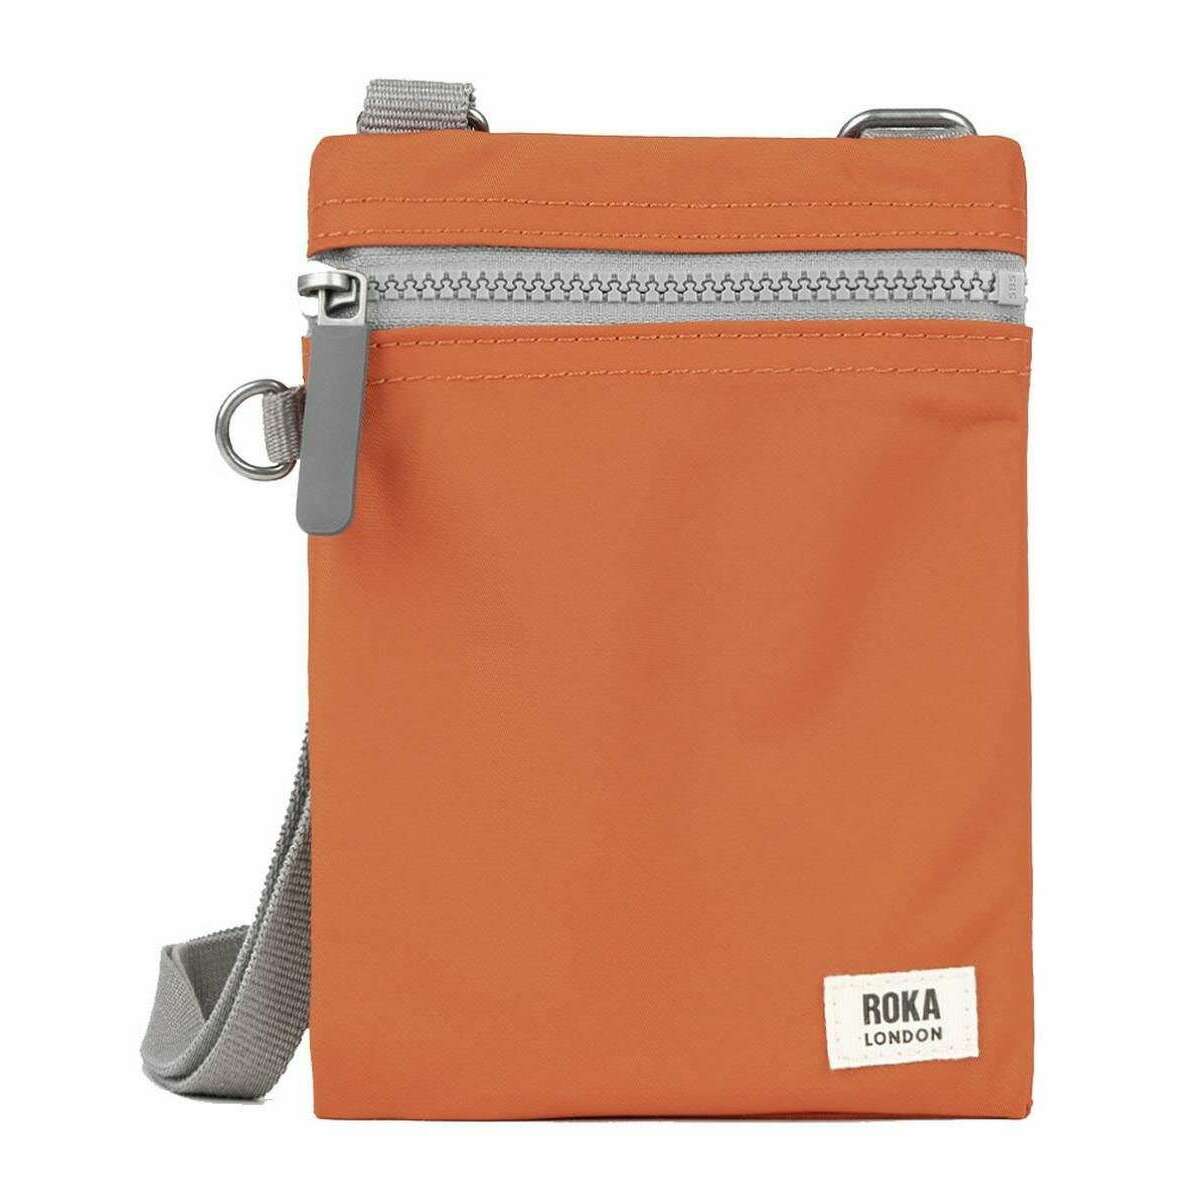 Roka Chelsea Sustainable Nylon Pocket Sling Bag - Rooibos Orange